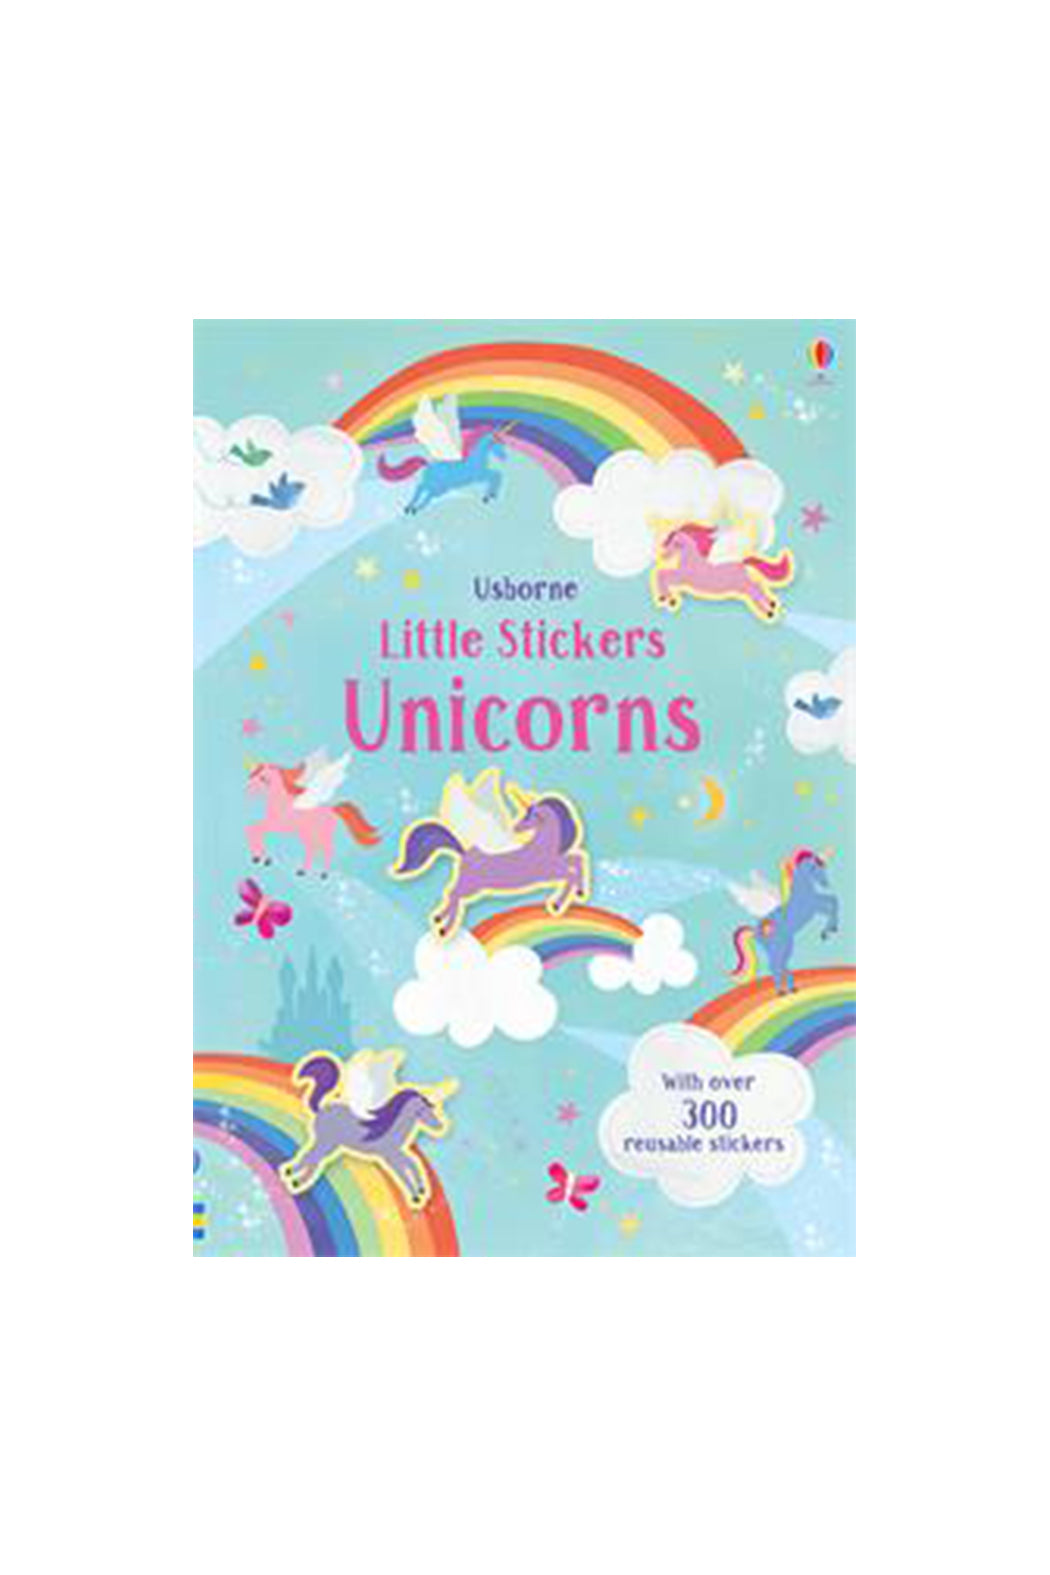 Usborne Little First Stickers Unicorns